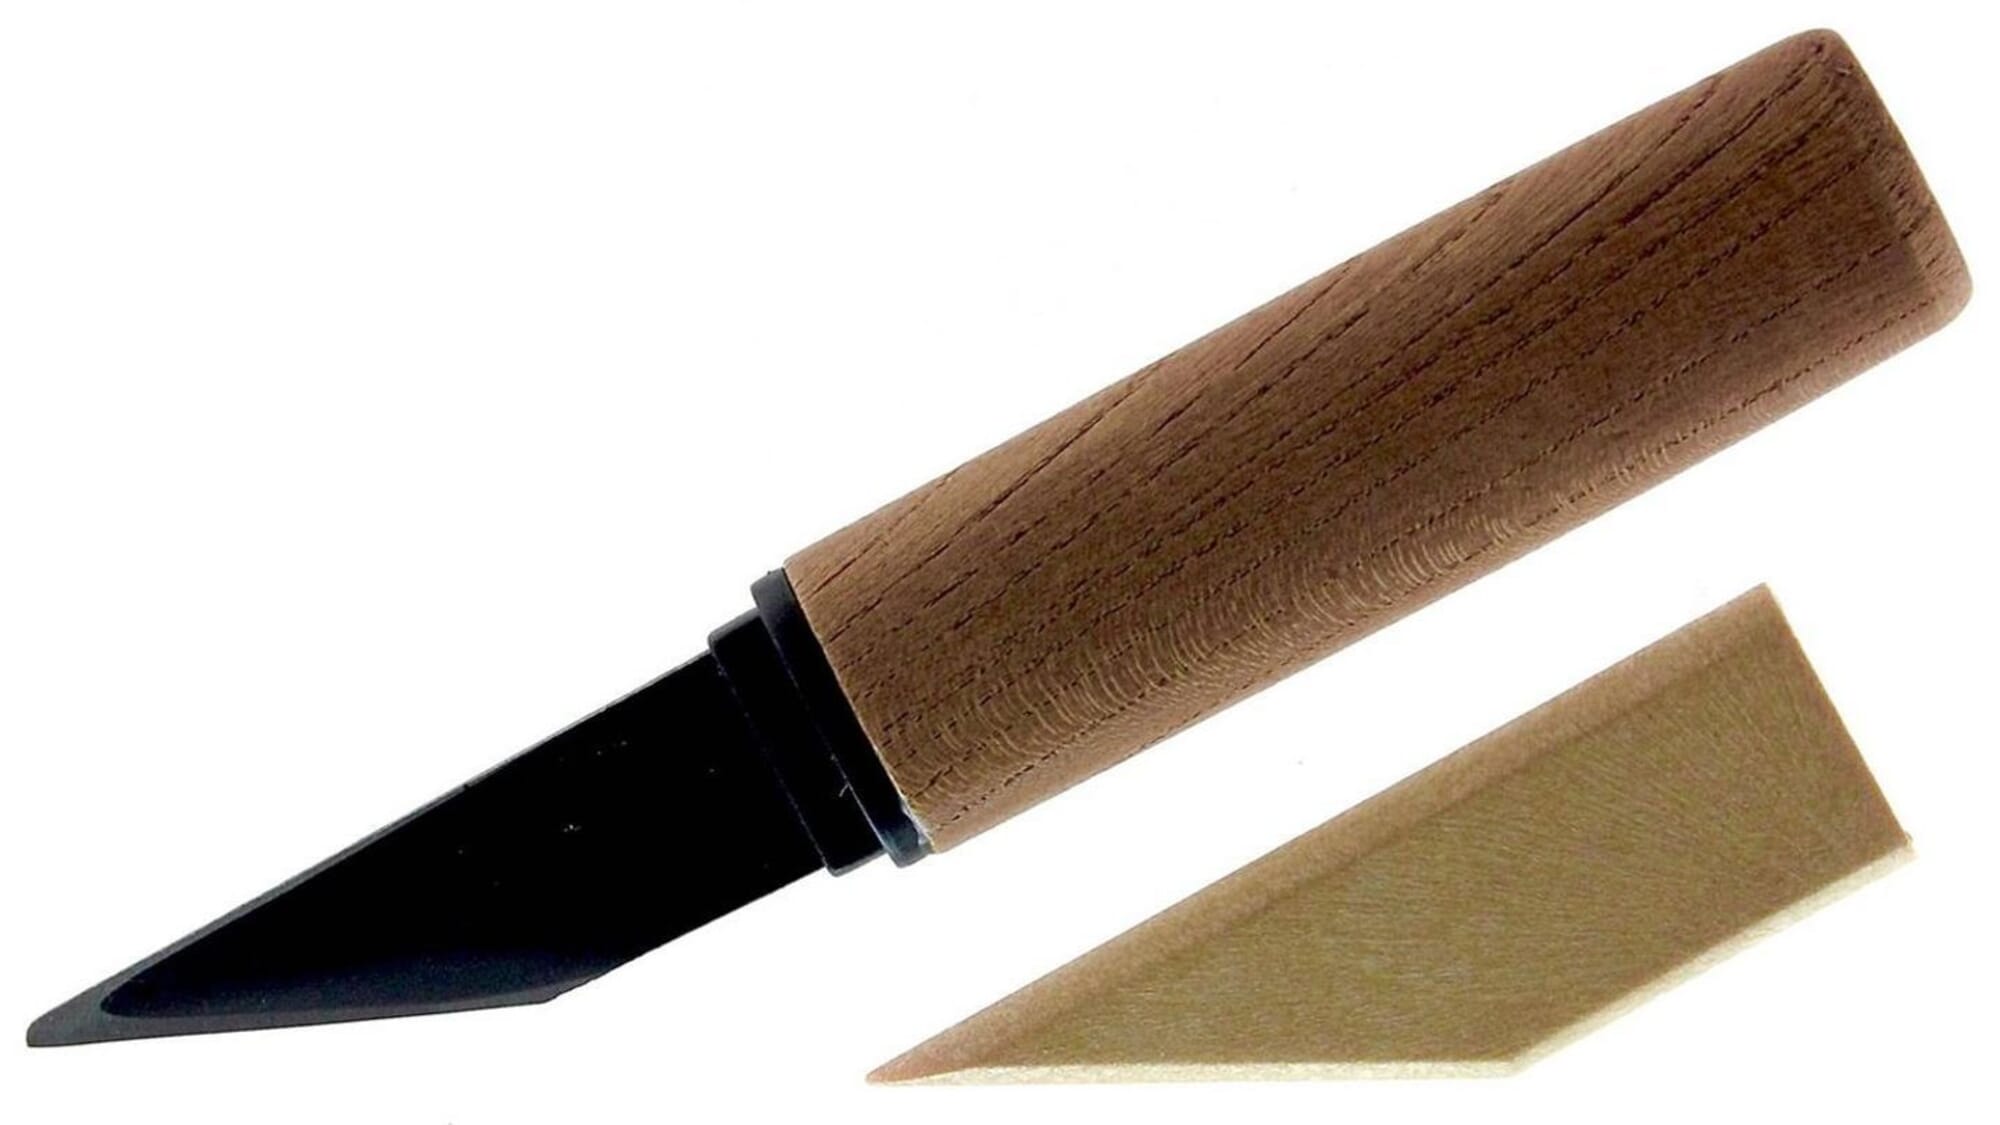 Suncraft - Handy Japanese Knife Sharpener